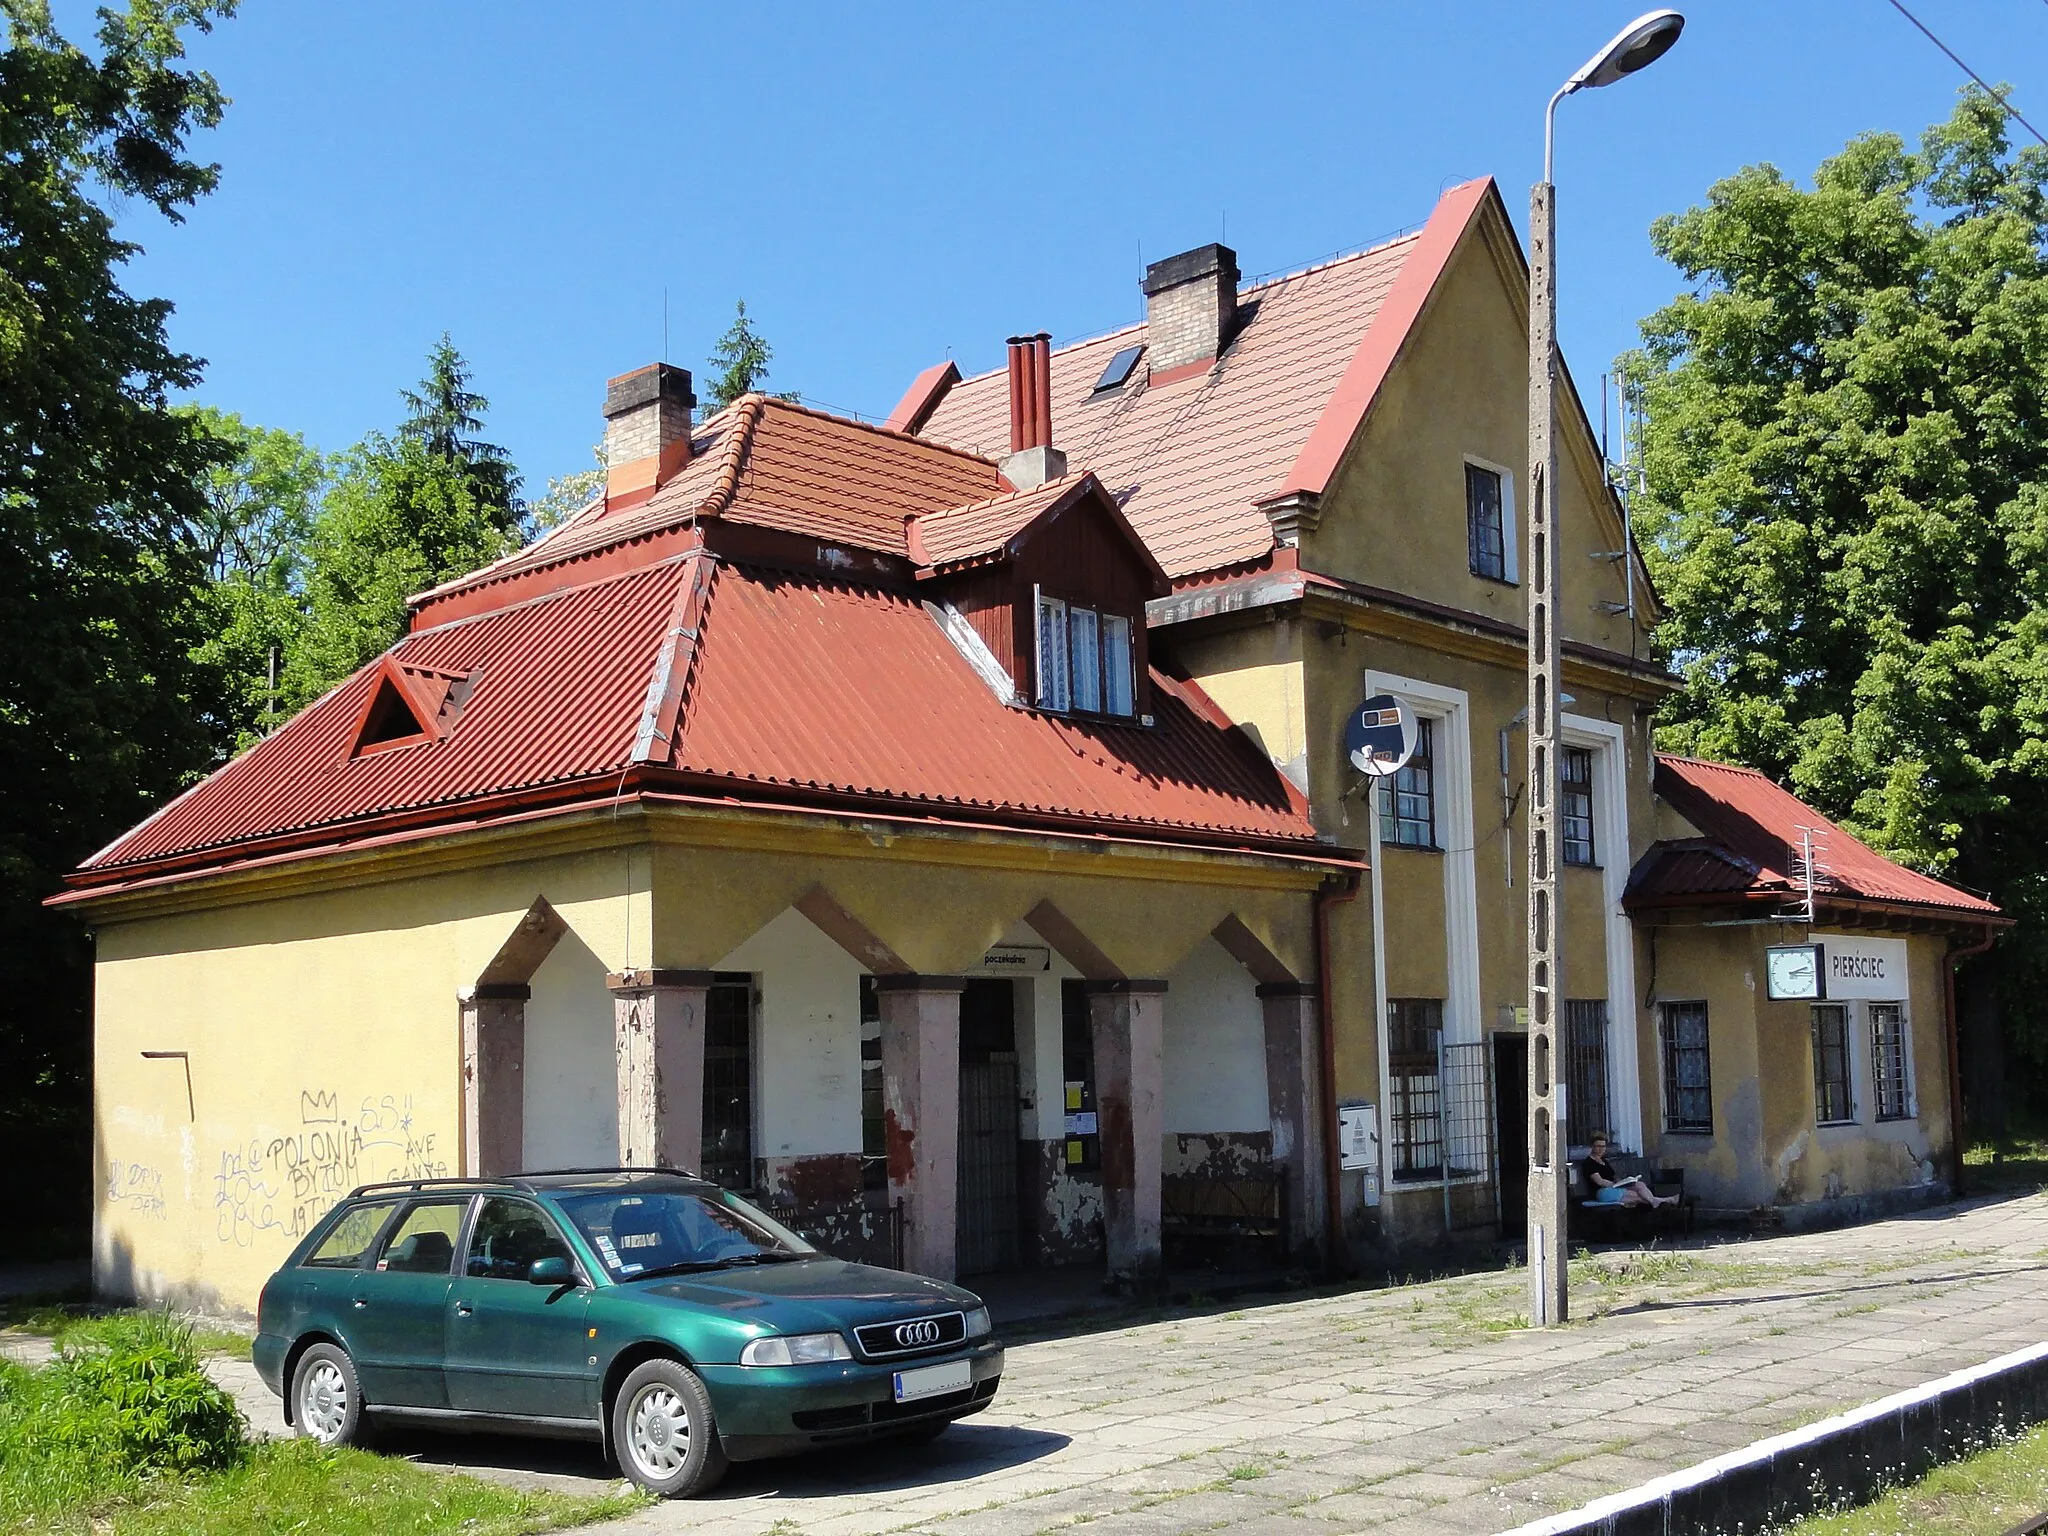 Photo showing: Tran station in Pierściec.